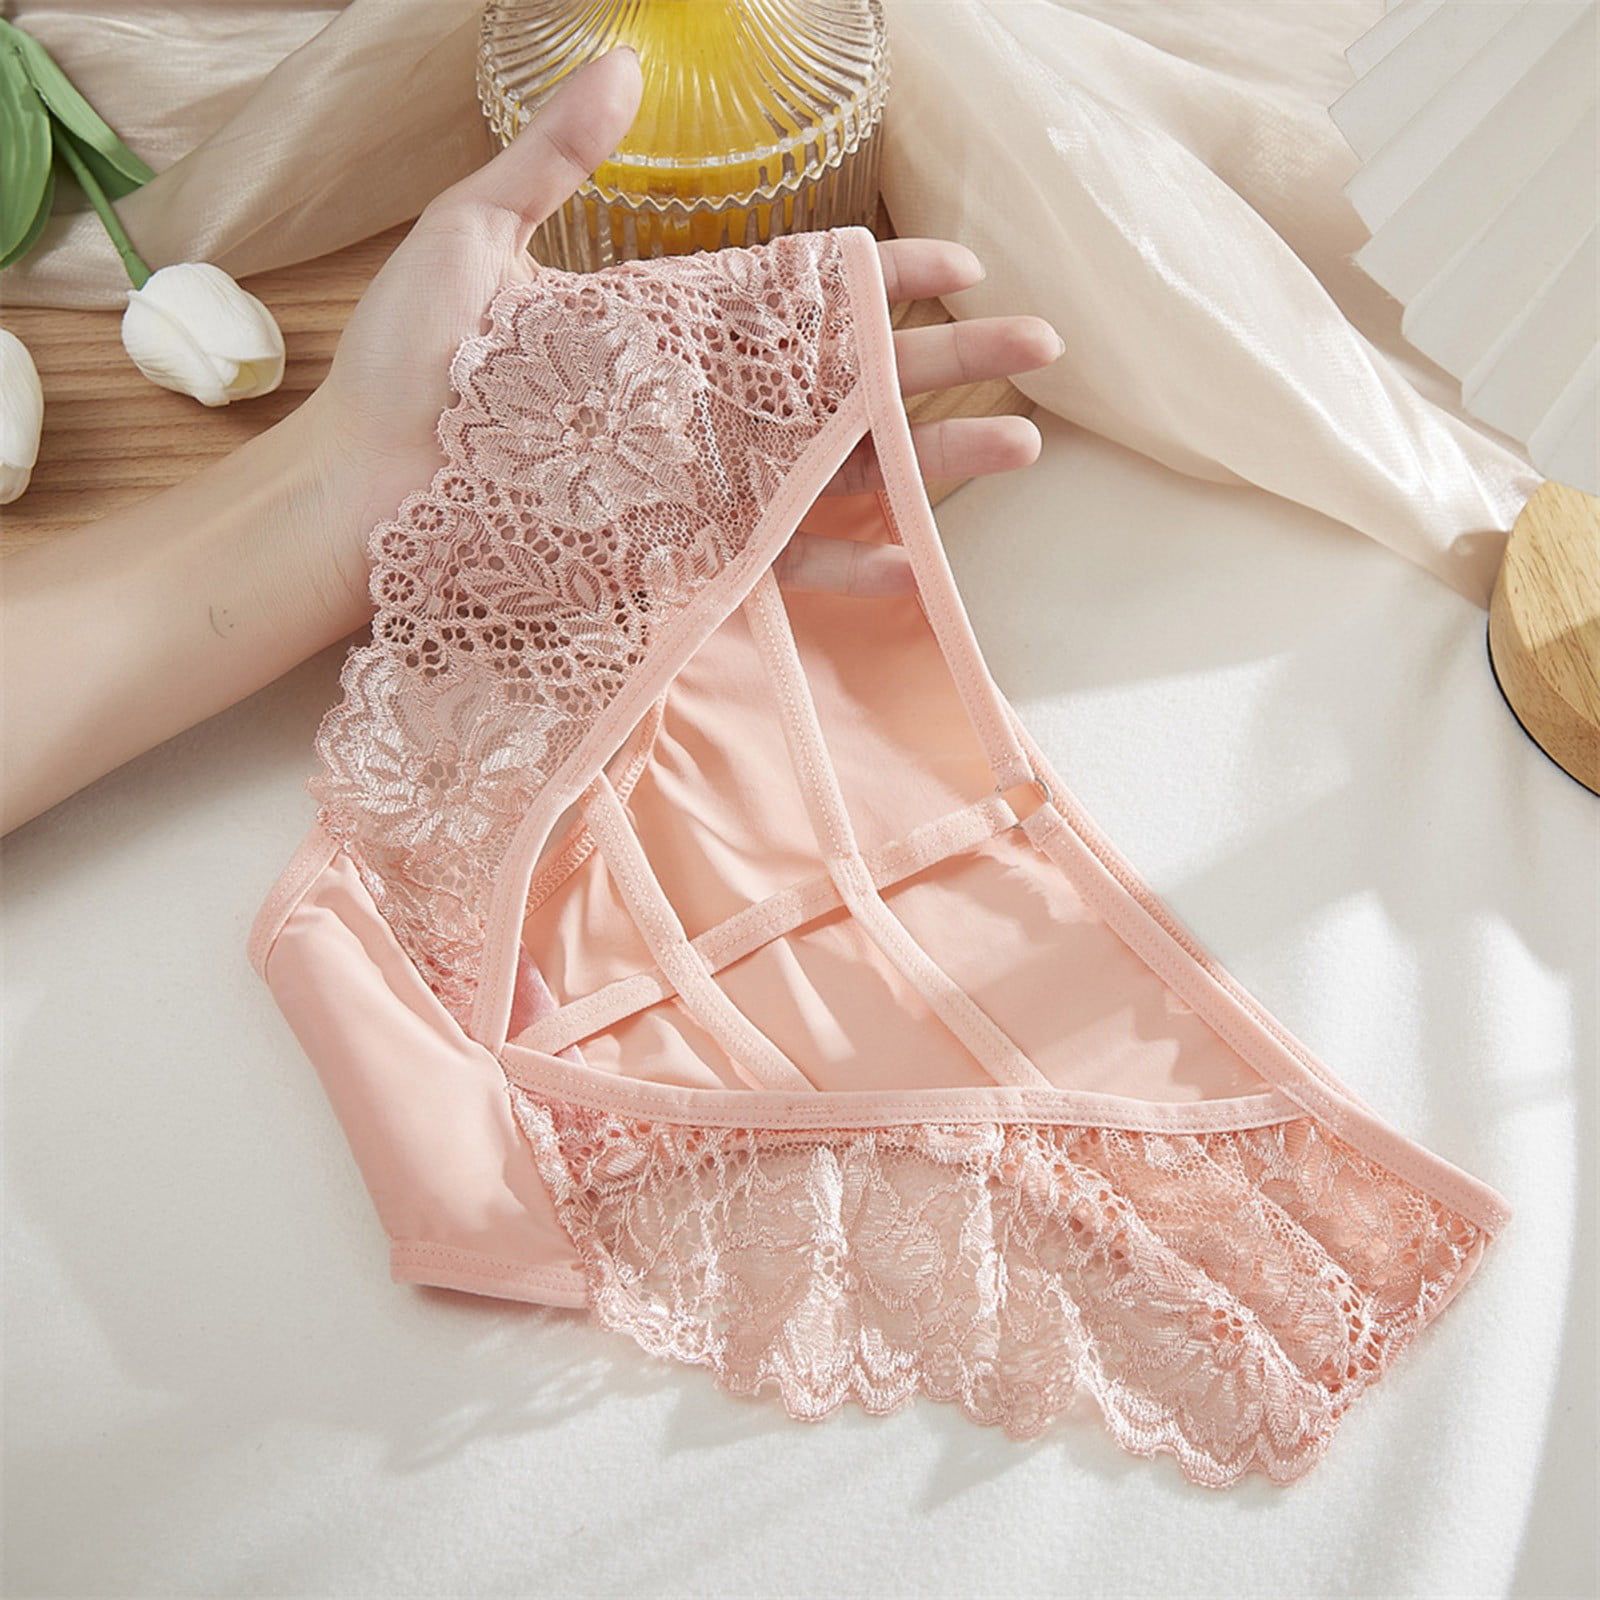 Aayomet Women'S Panties Girl High Waist G String Brief Pantie Thong  Lingerie Knicker Lace Underwear,B XL